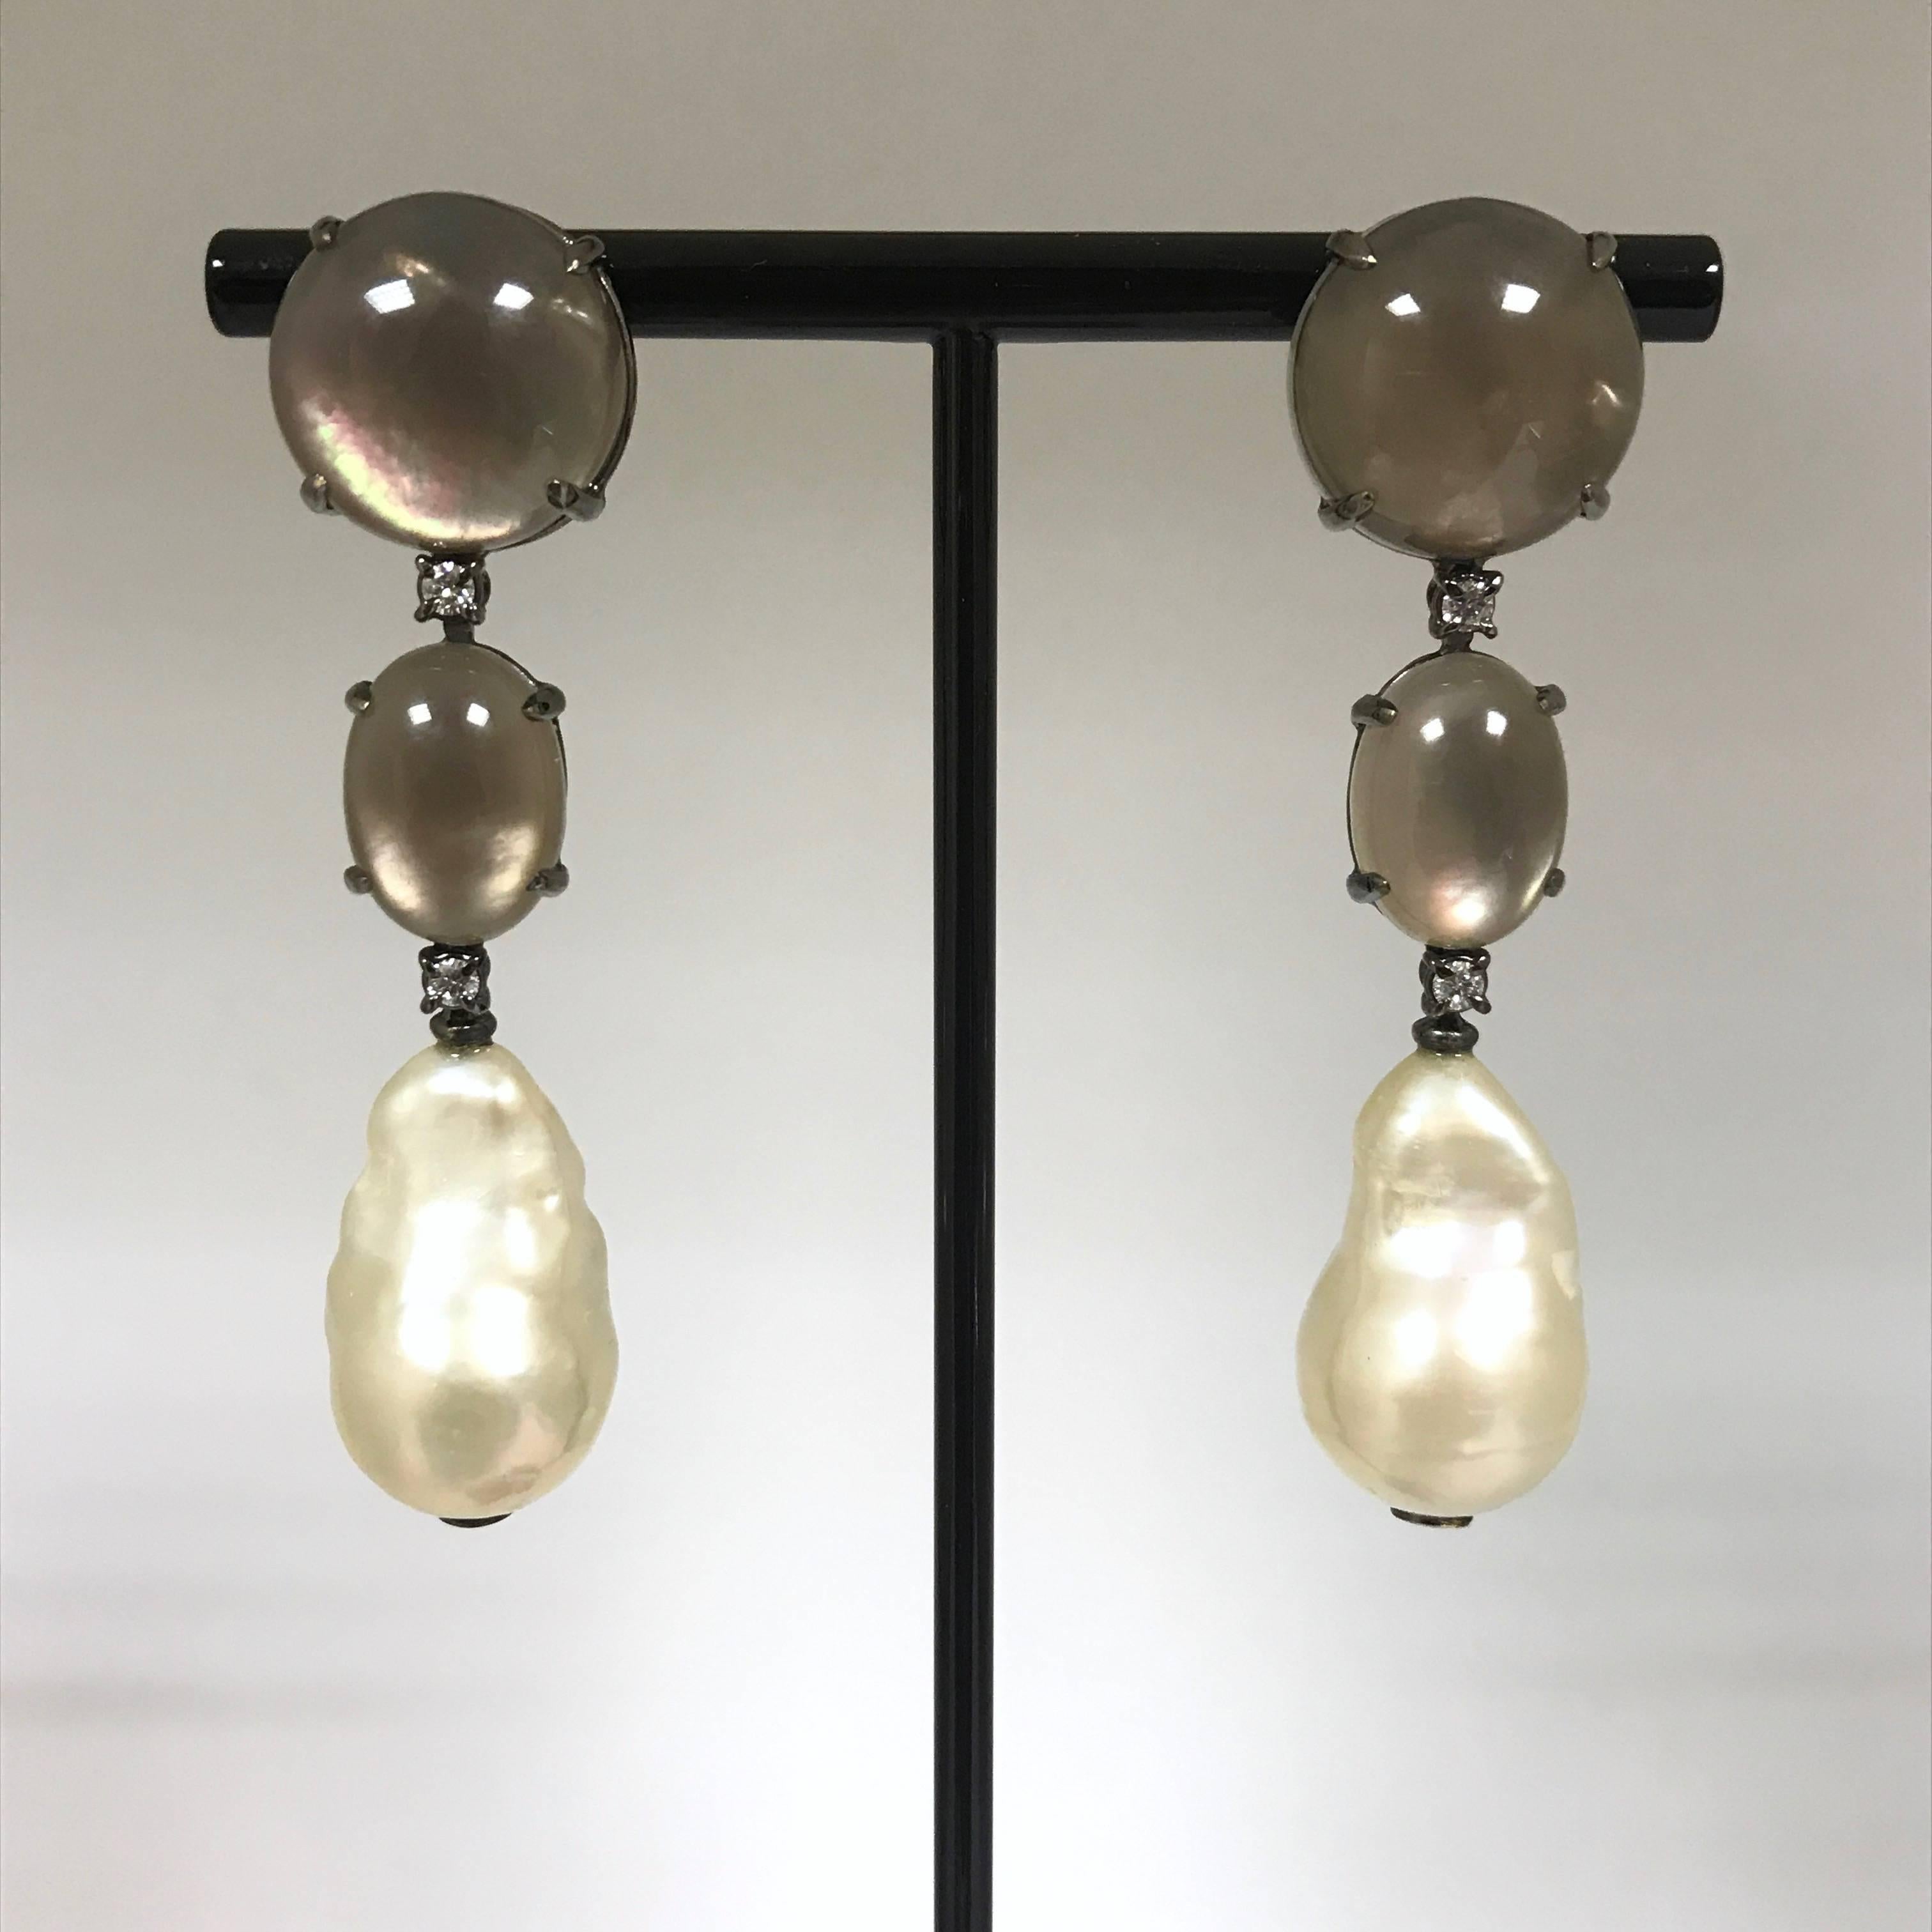 Cultured Pearls Smoky Quartz and White Diamonds Drop Earrings
Cultured Pearls
Smoky Quartz
White Diamonds 0,32 Carat
Black Gold 18 K
